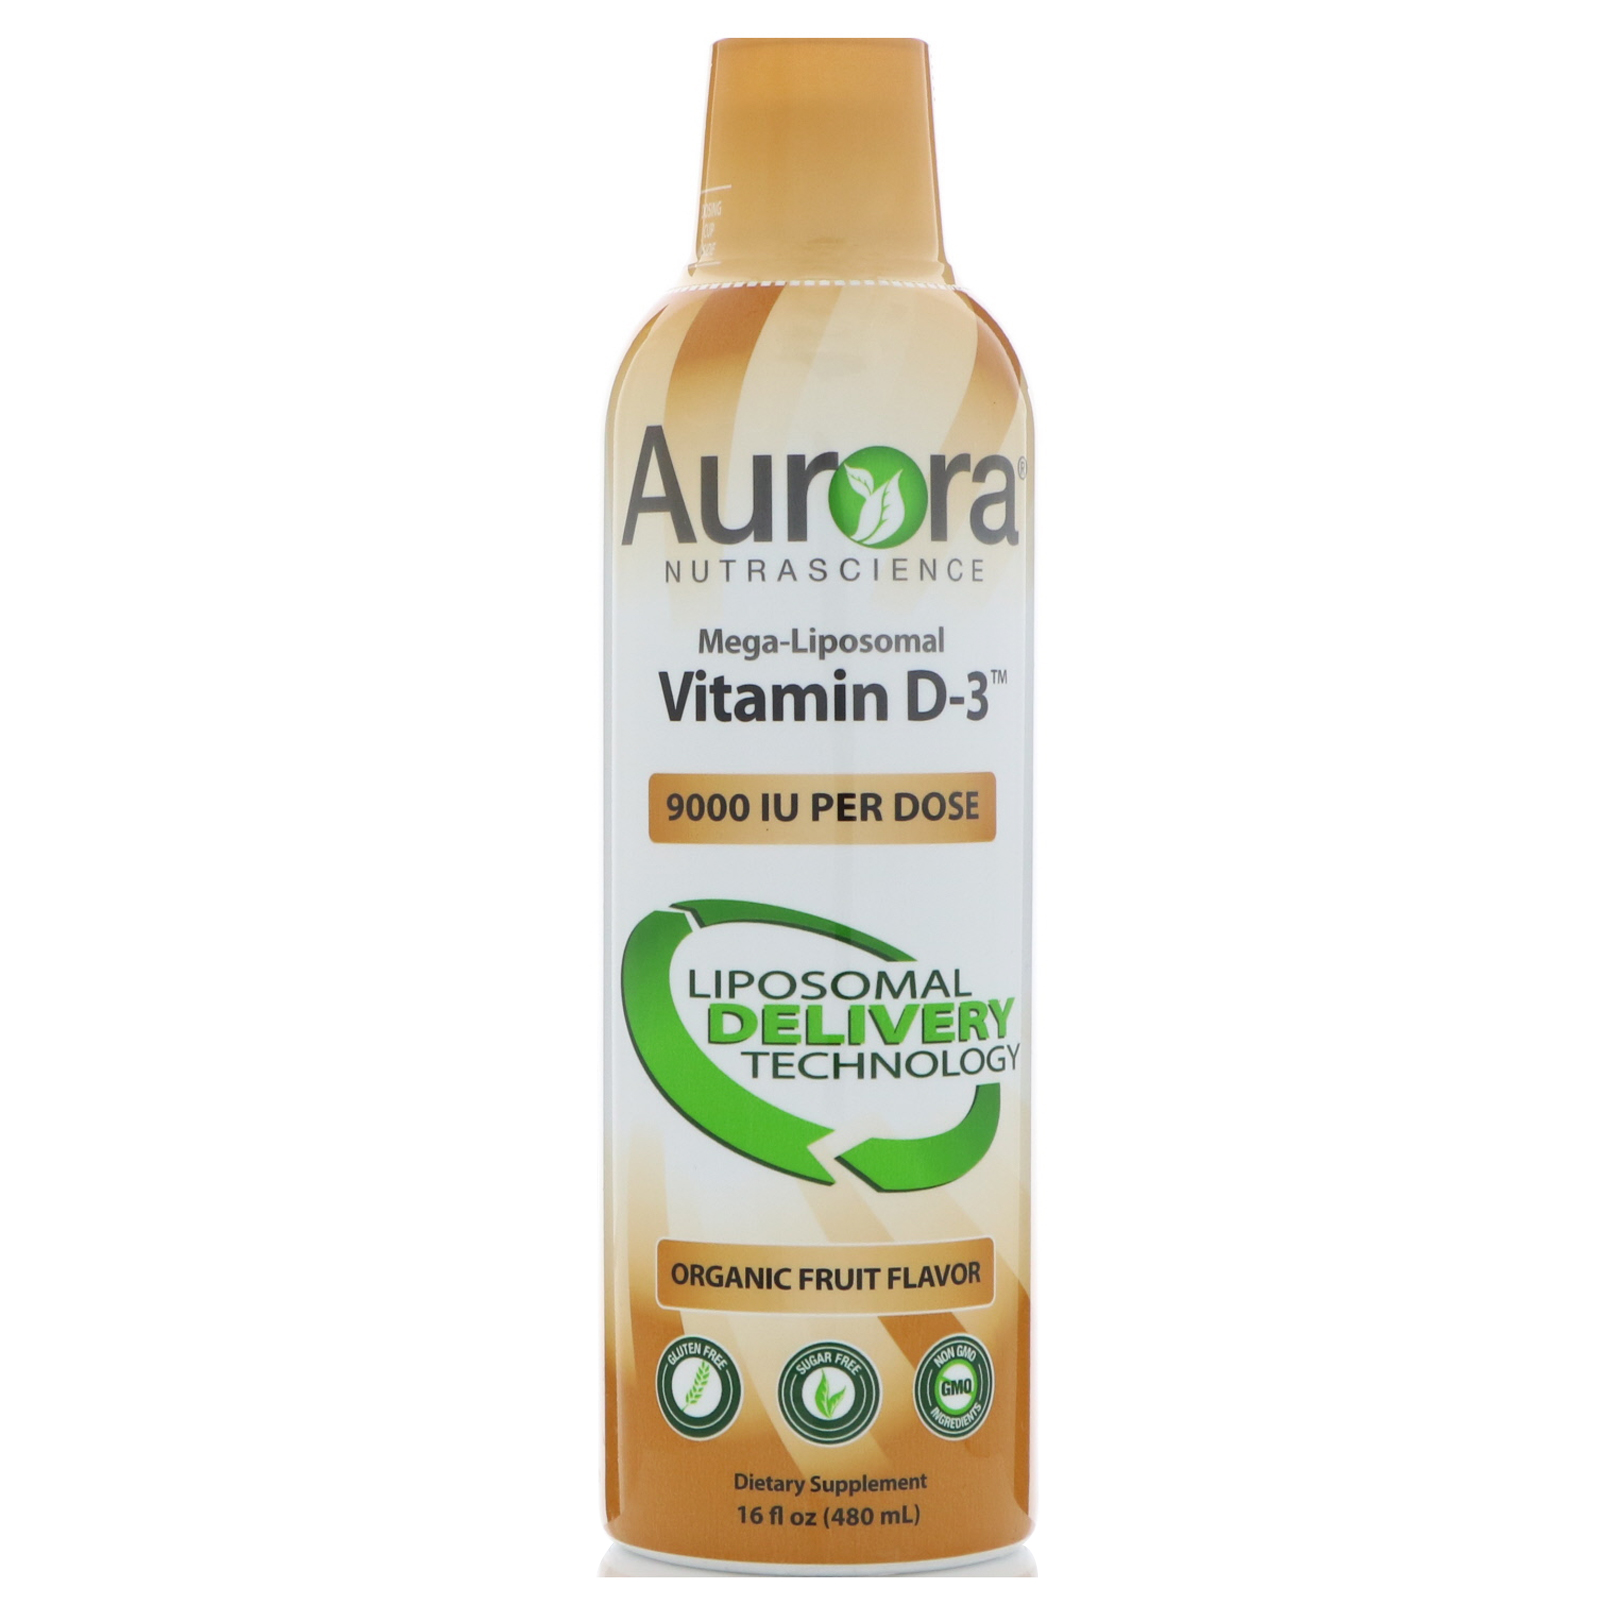 Aurora Nutrascience Mega Liposomal Vitamin D3 Organic